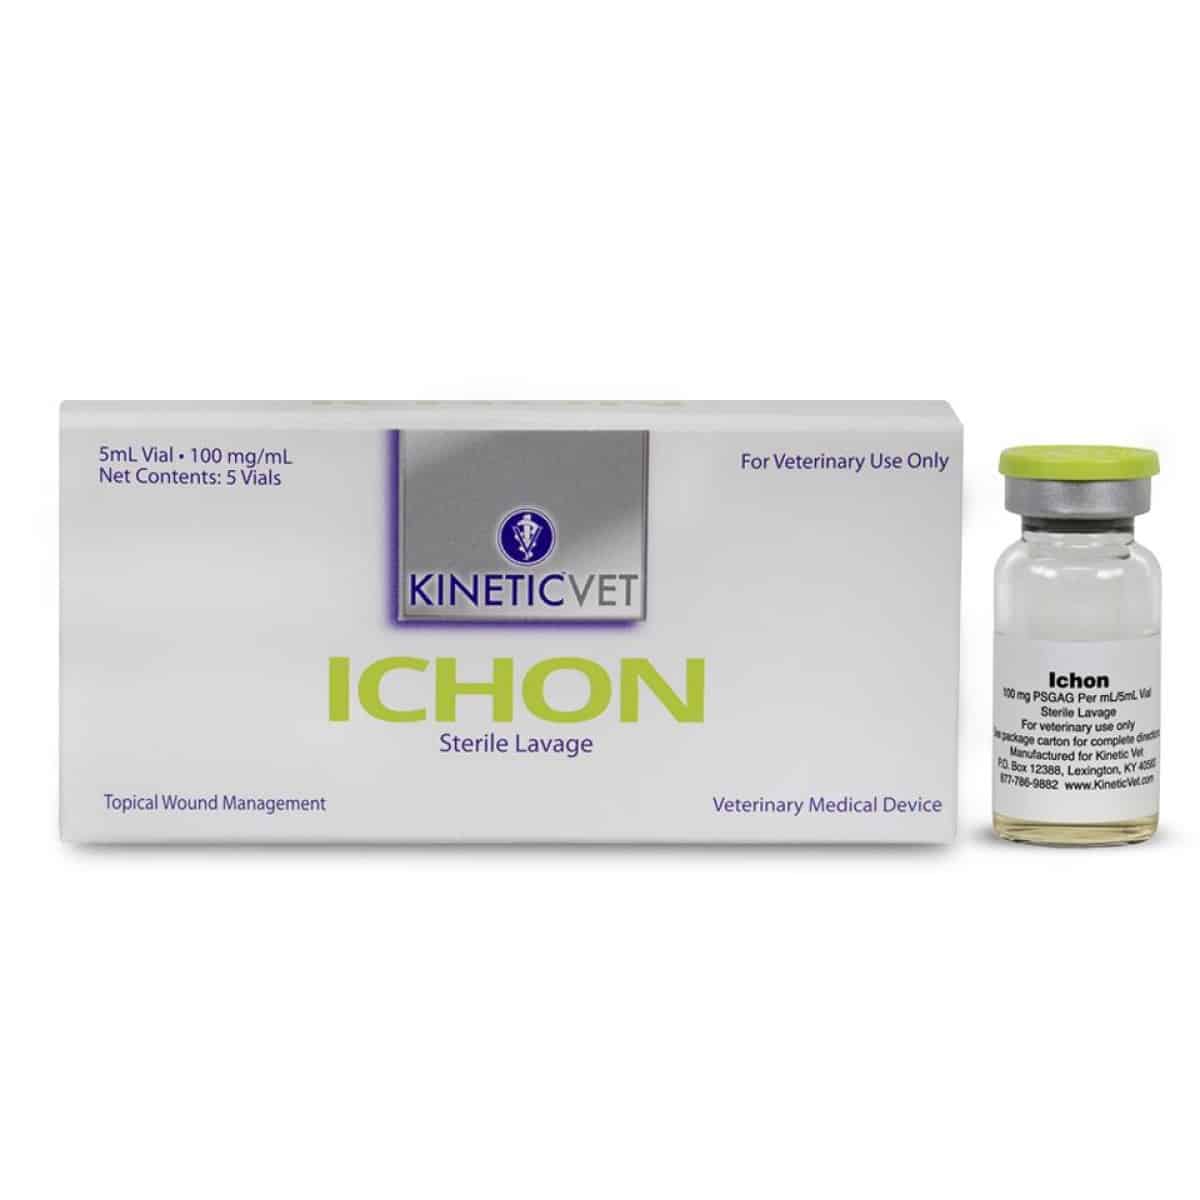 ICHON (Polysulfated Glycosaminoglycan) box